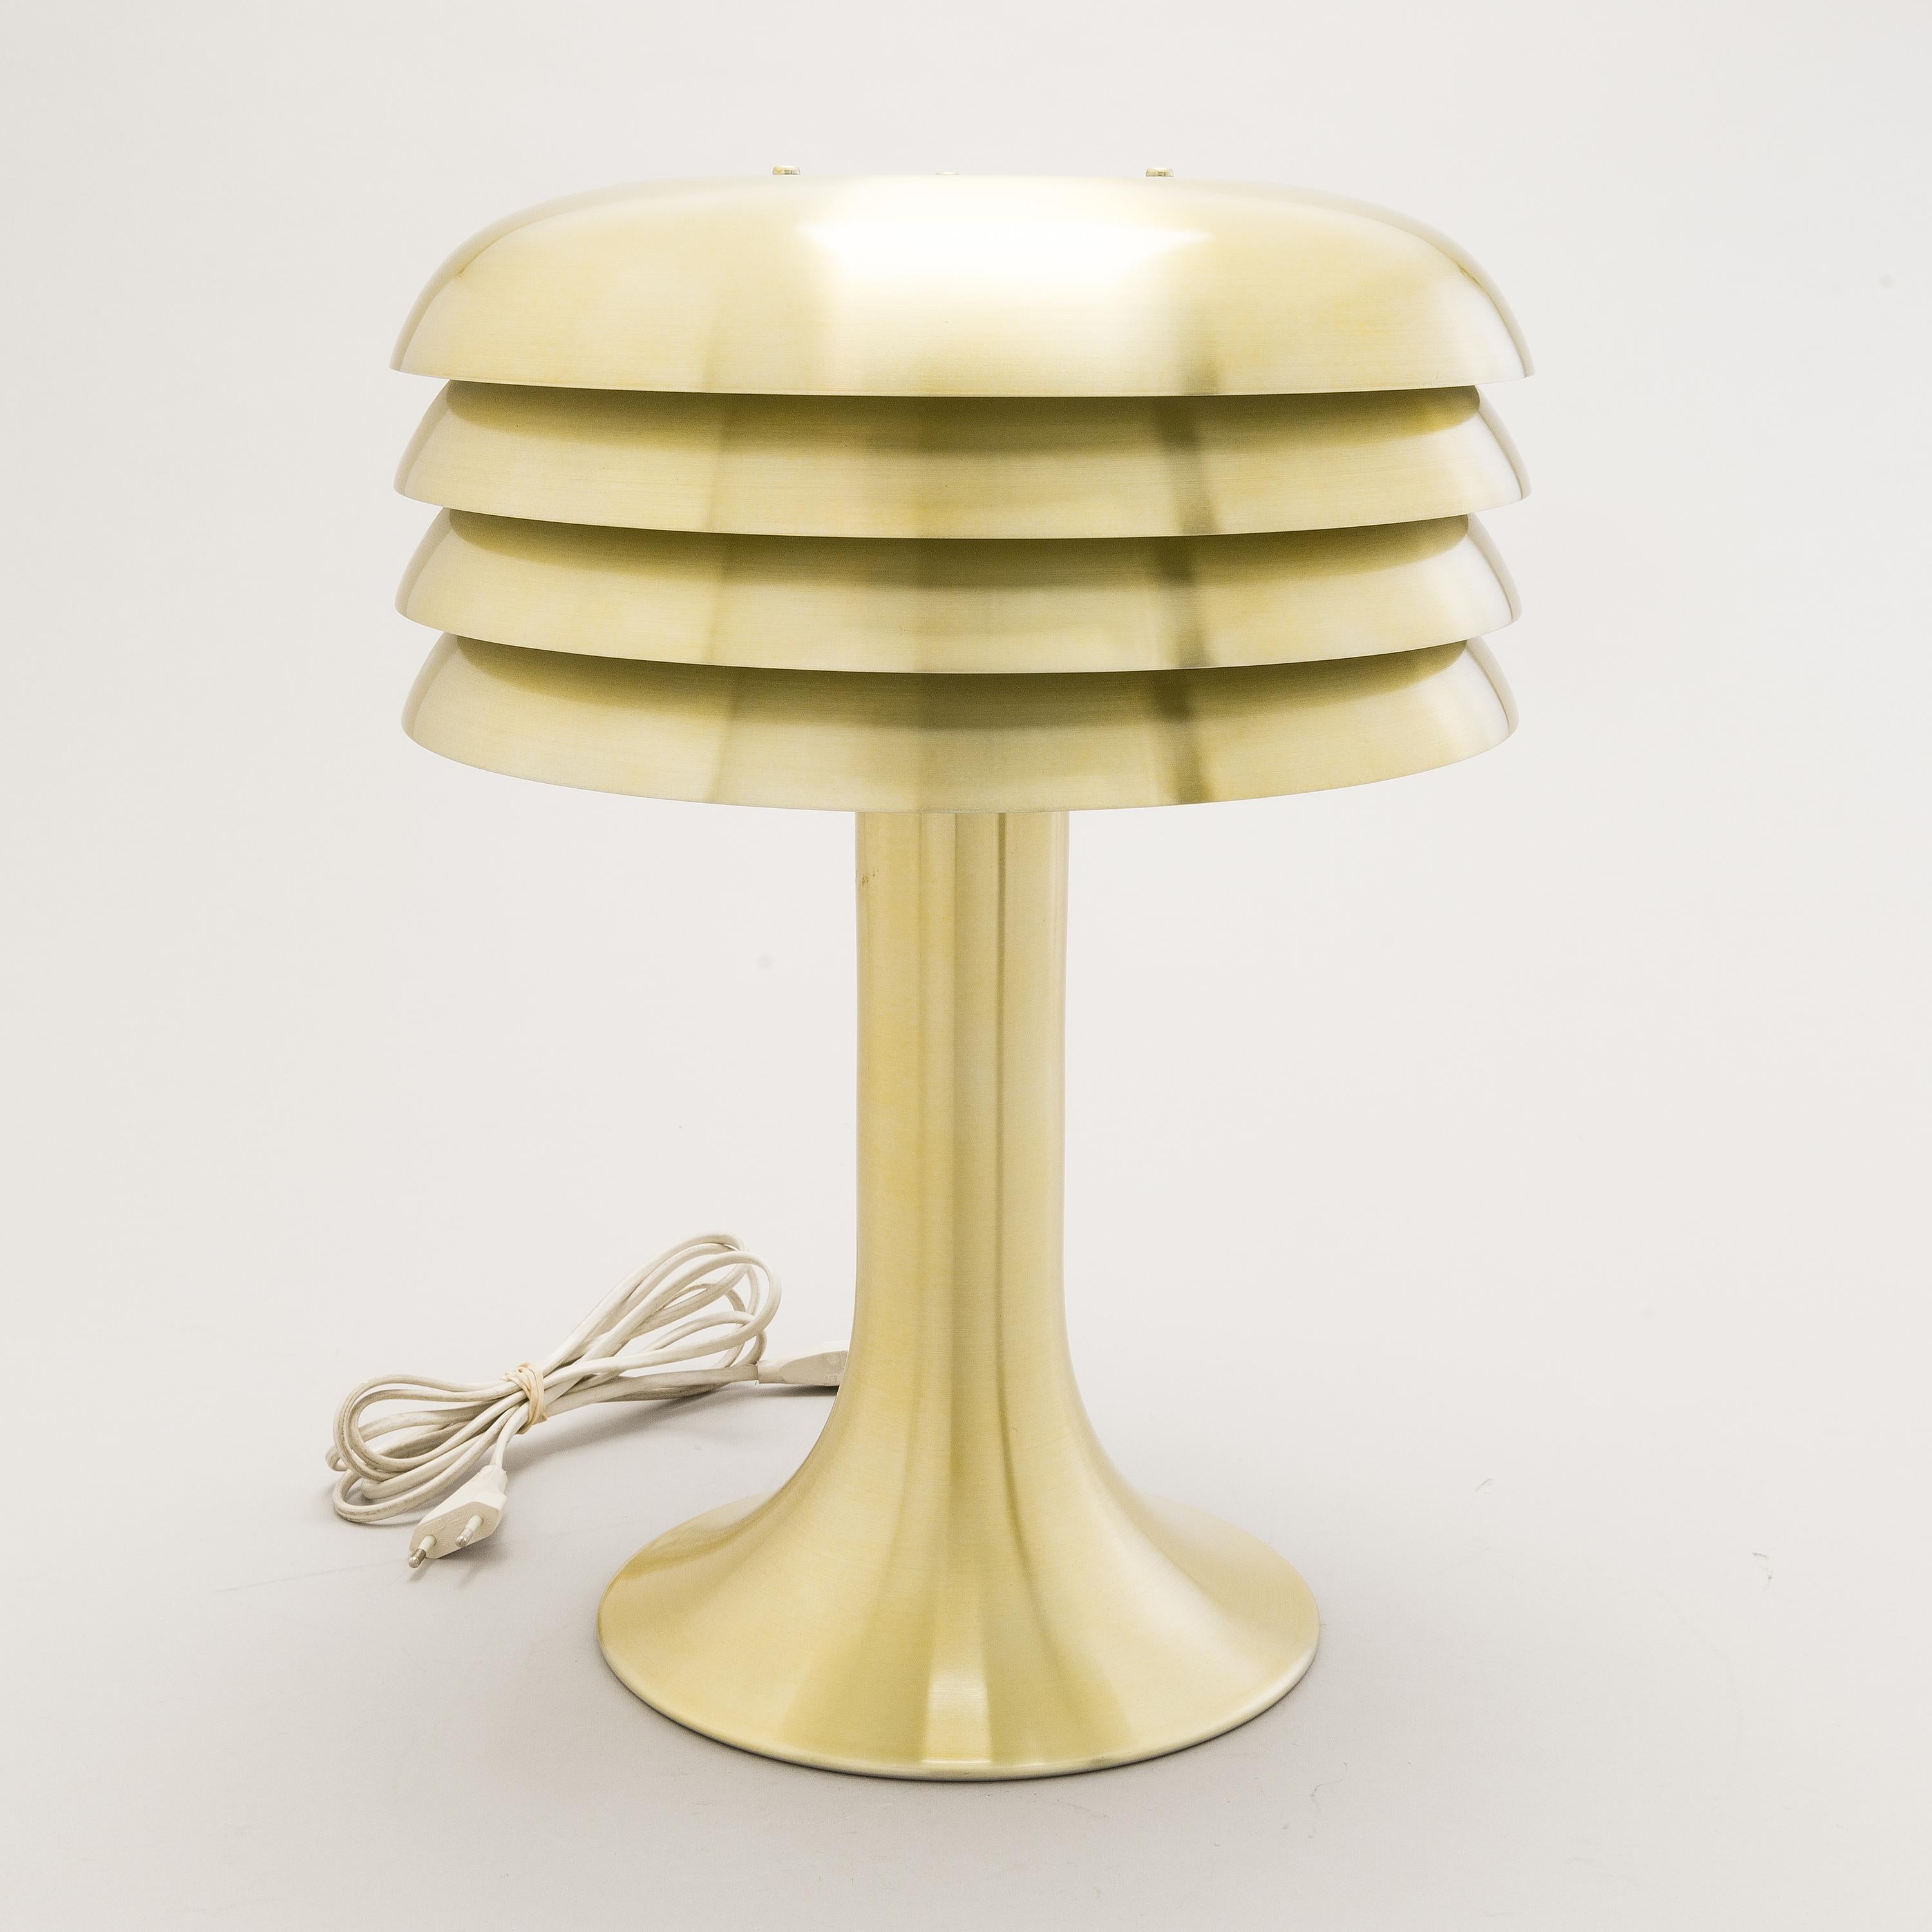 Hans-Agne Jakobsson, brass coloured table lamp, model BN-26, Sweden, circa 1975

Artist
Hans-Agne Jakobsson (1919 Havdhem, Sweden – 2009 Markaryd, Sweden) was a Swedish designer, most known for his various lighting designs. Educated as an architect